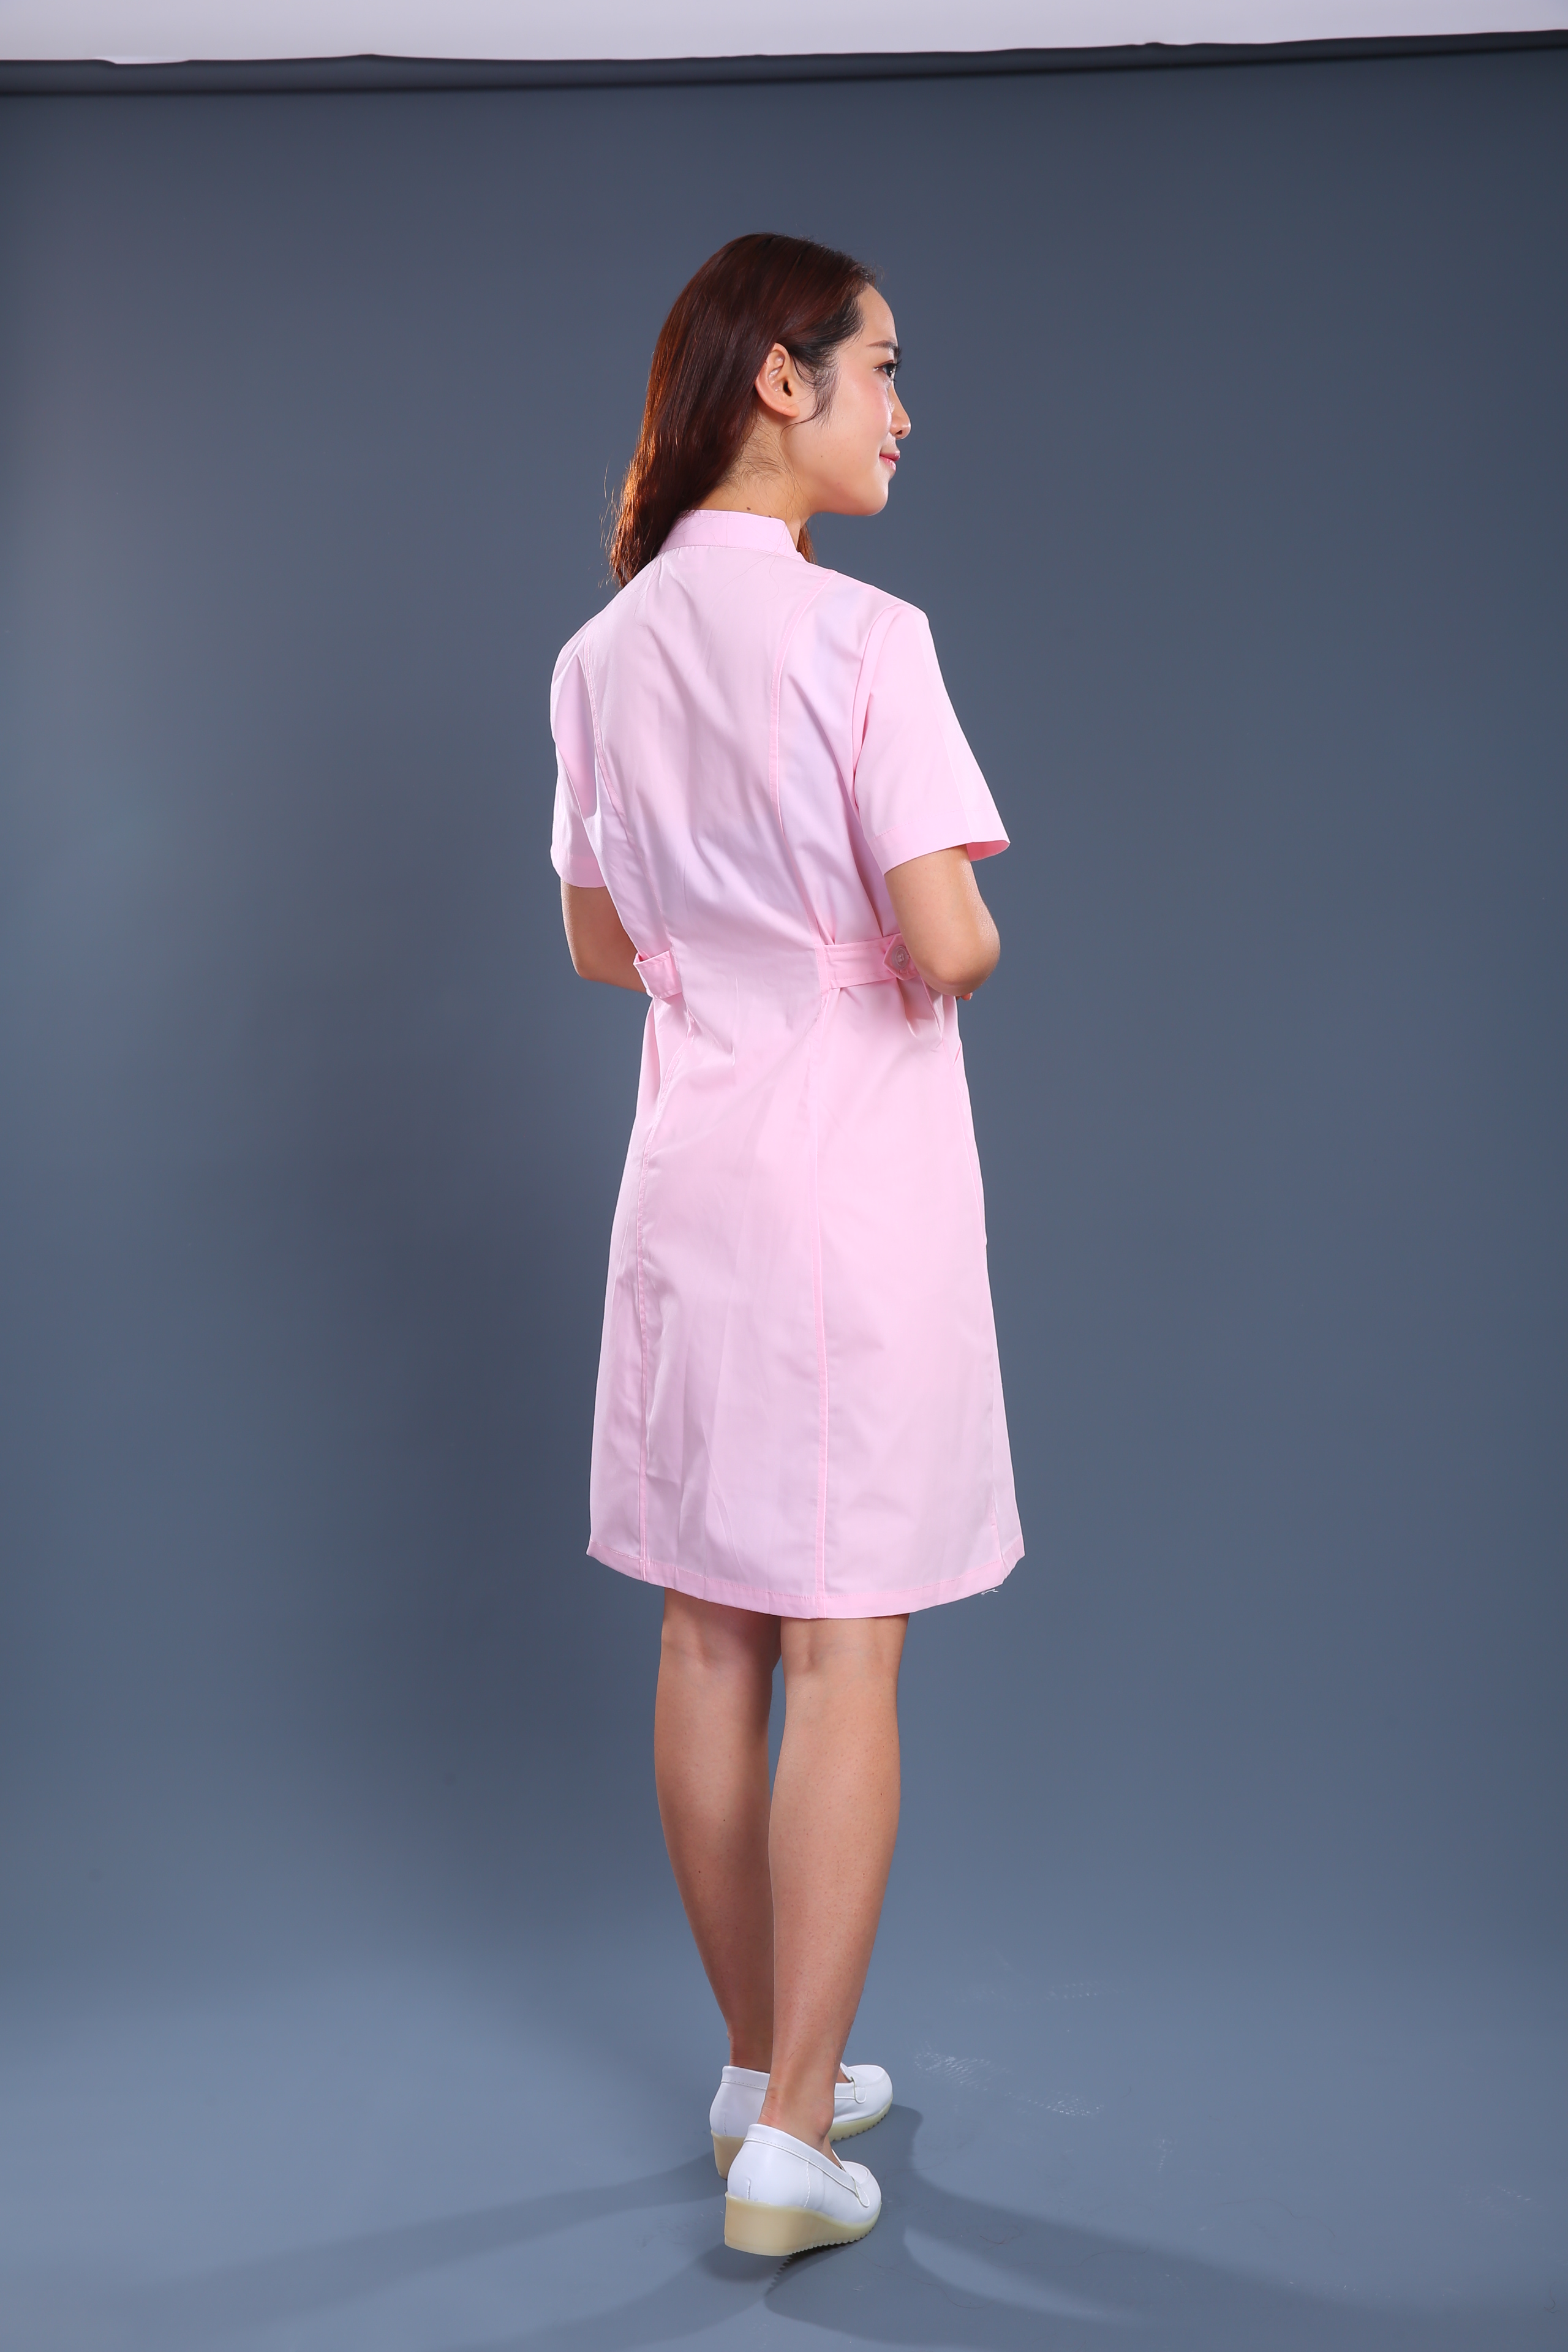 粉色护士制服背面